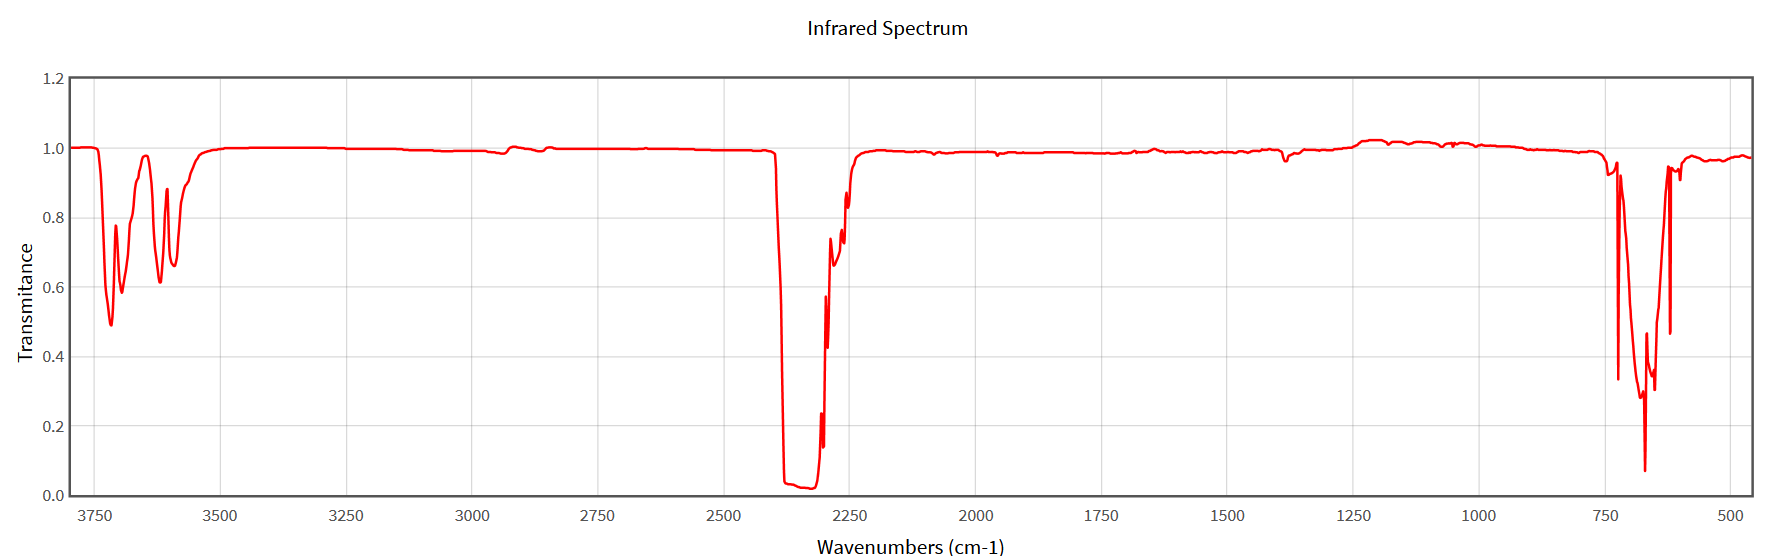 IR spectrum of carbon dioxide